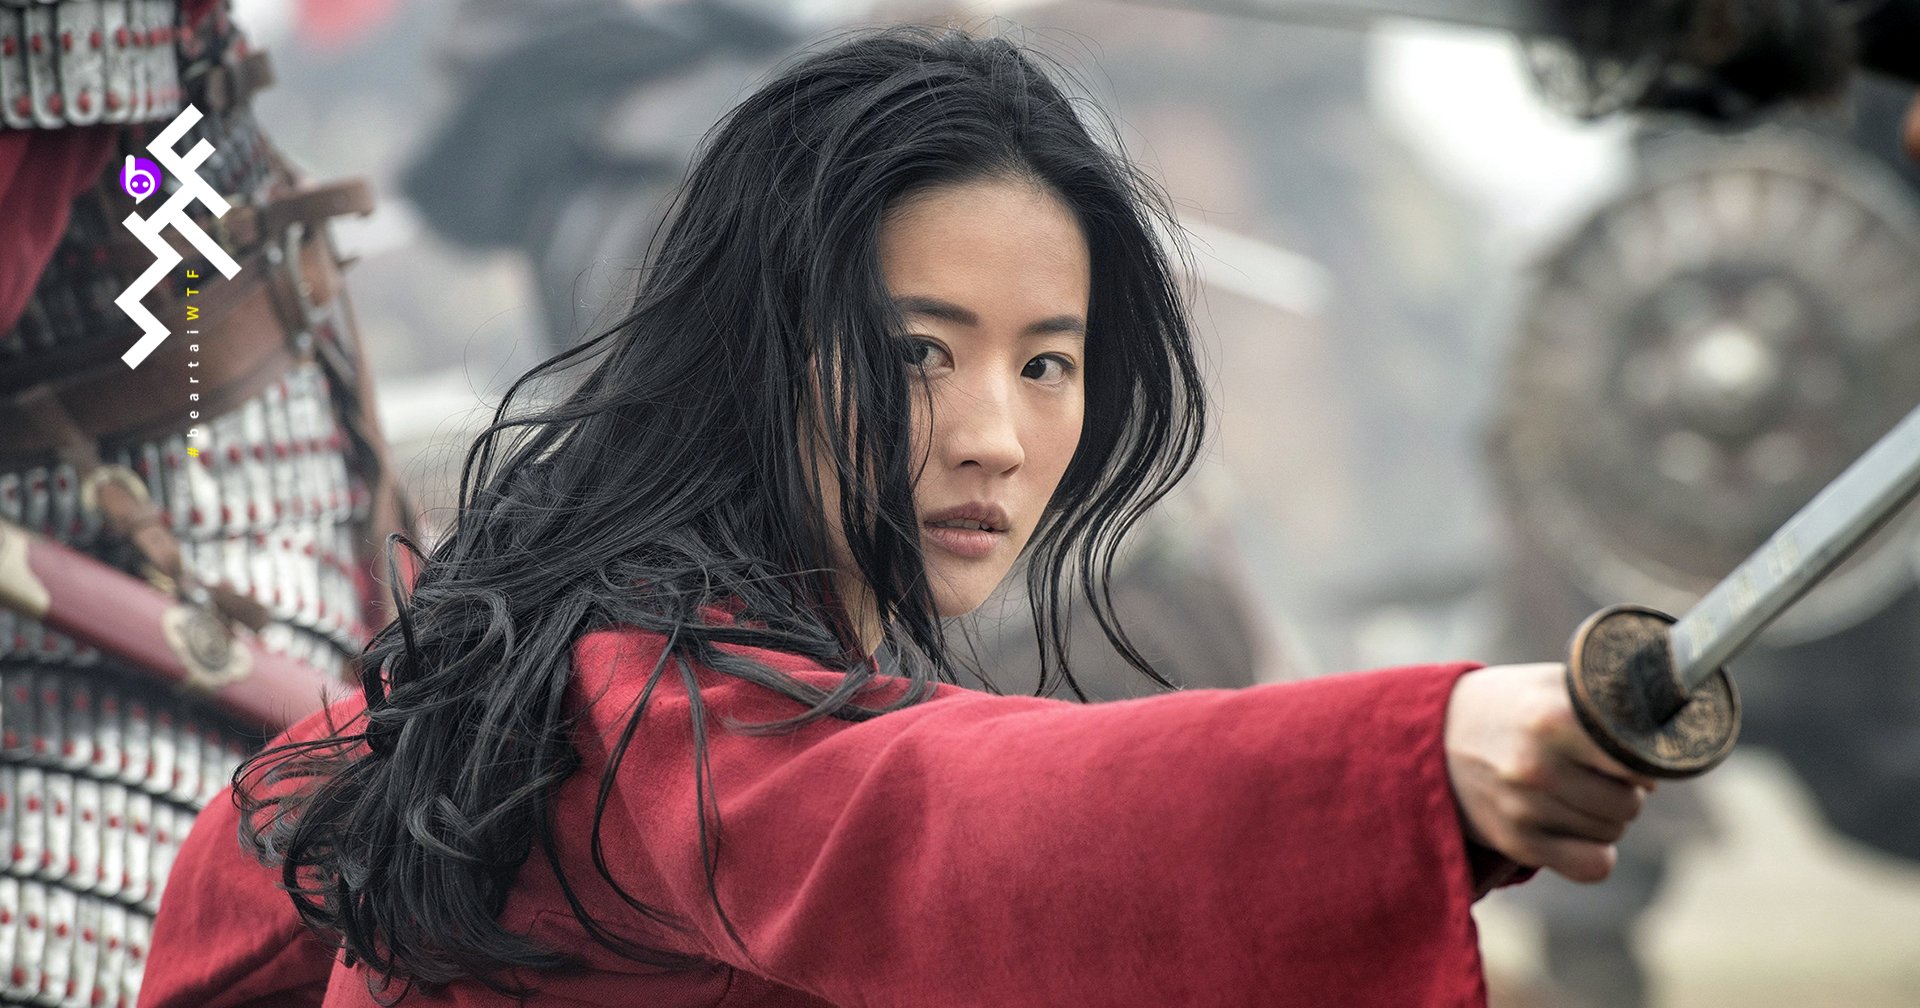 Mulan ชนะรางวัลภาพยนตร์แอ็กชันแห่งปี 2020 จาก People’s Choice Awards มาได้